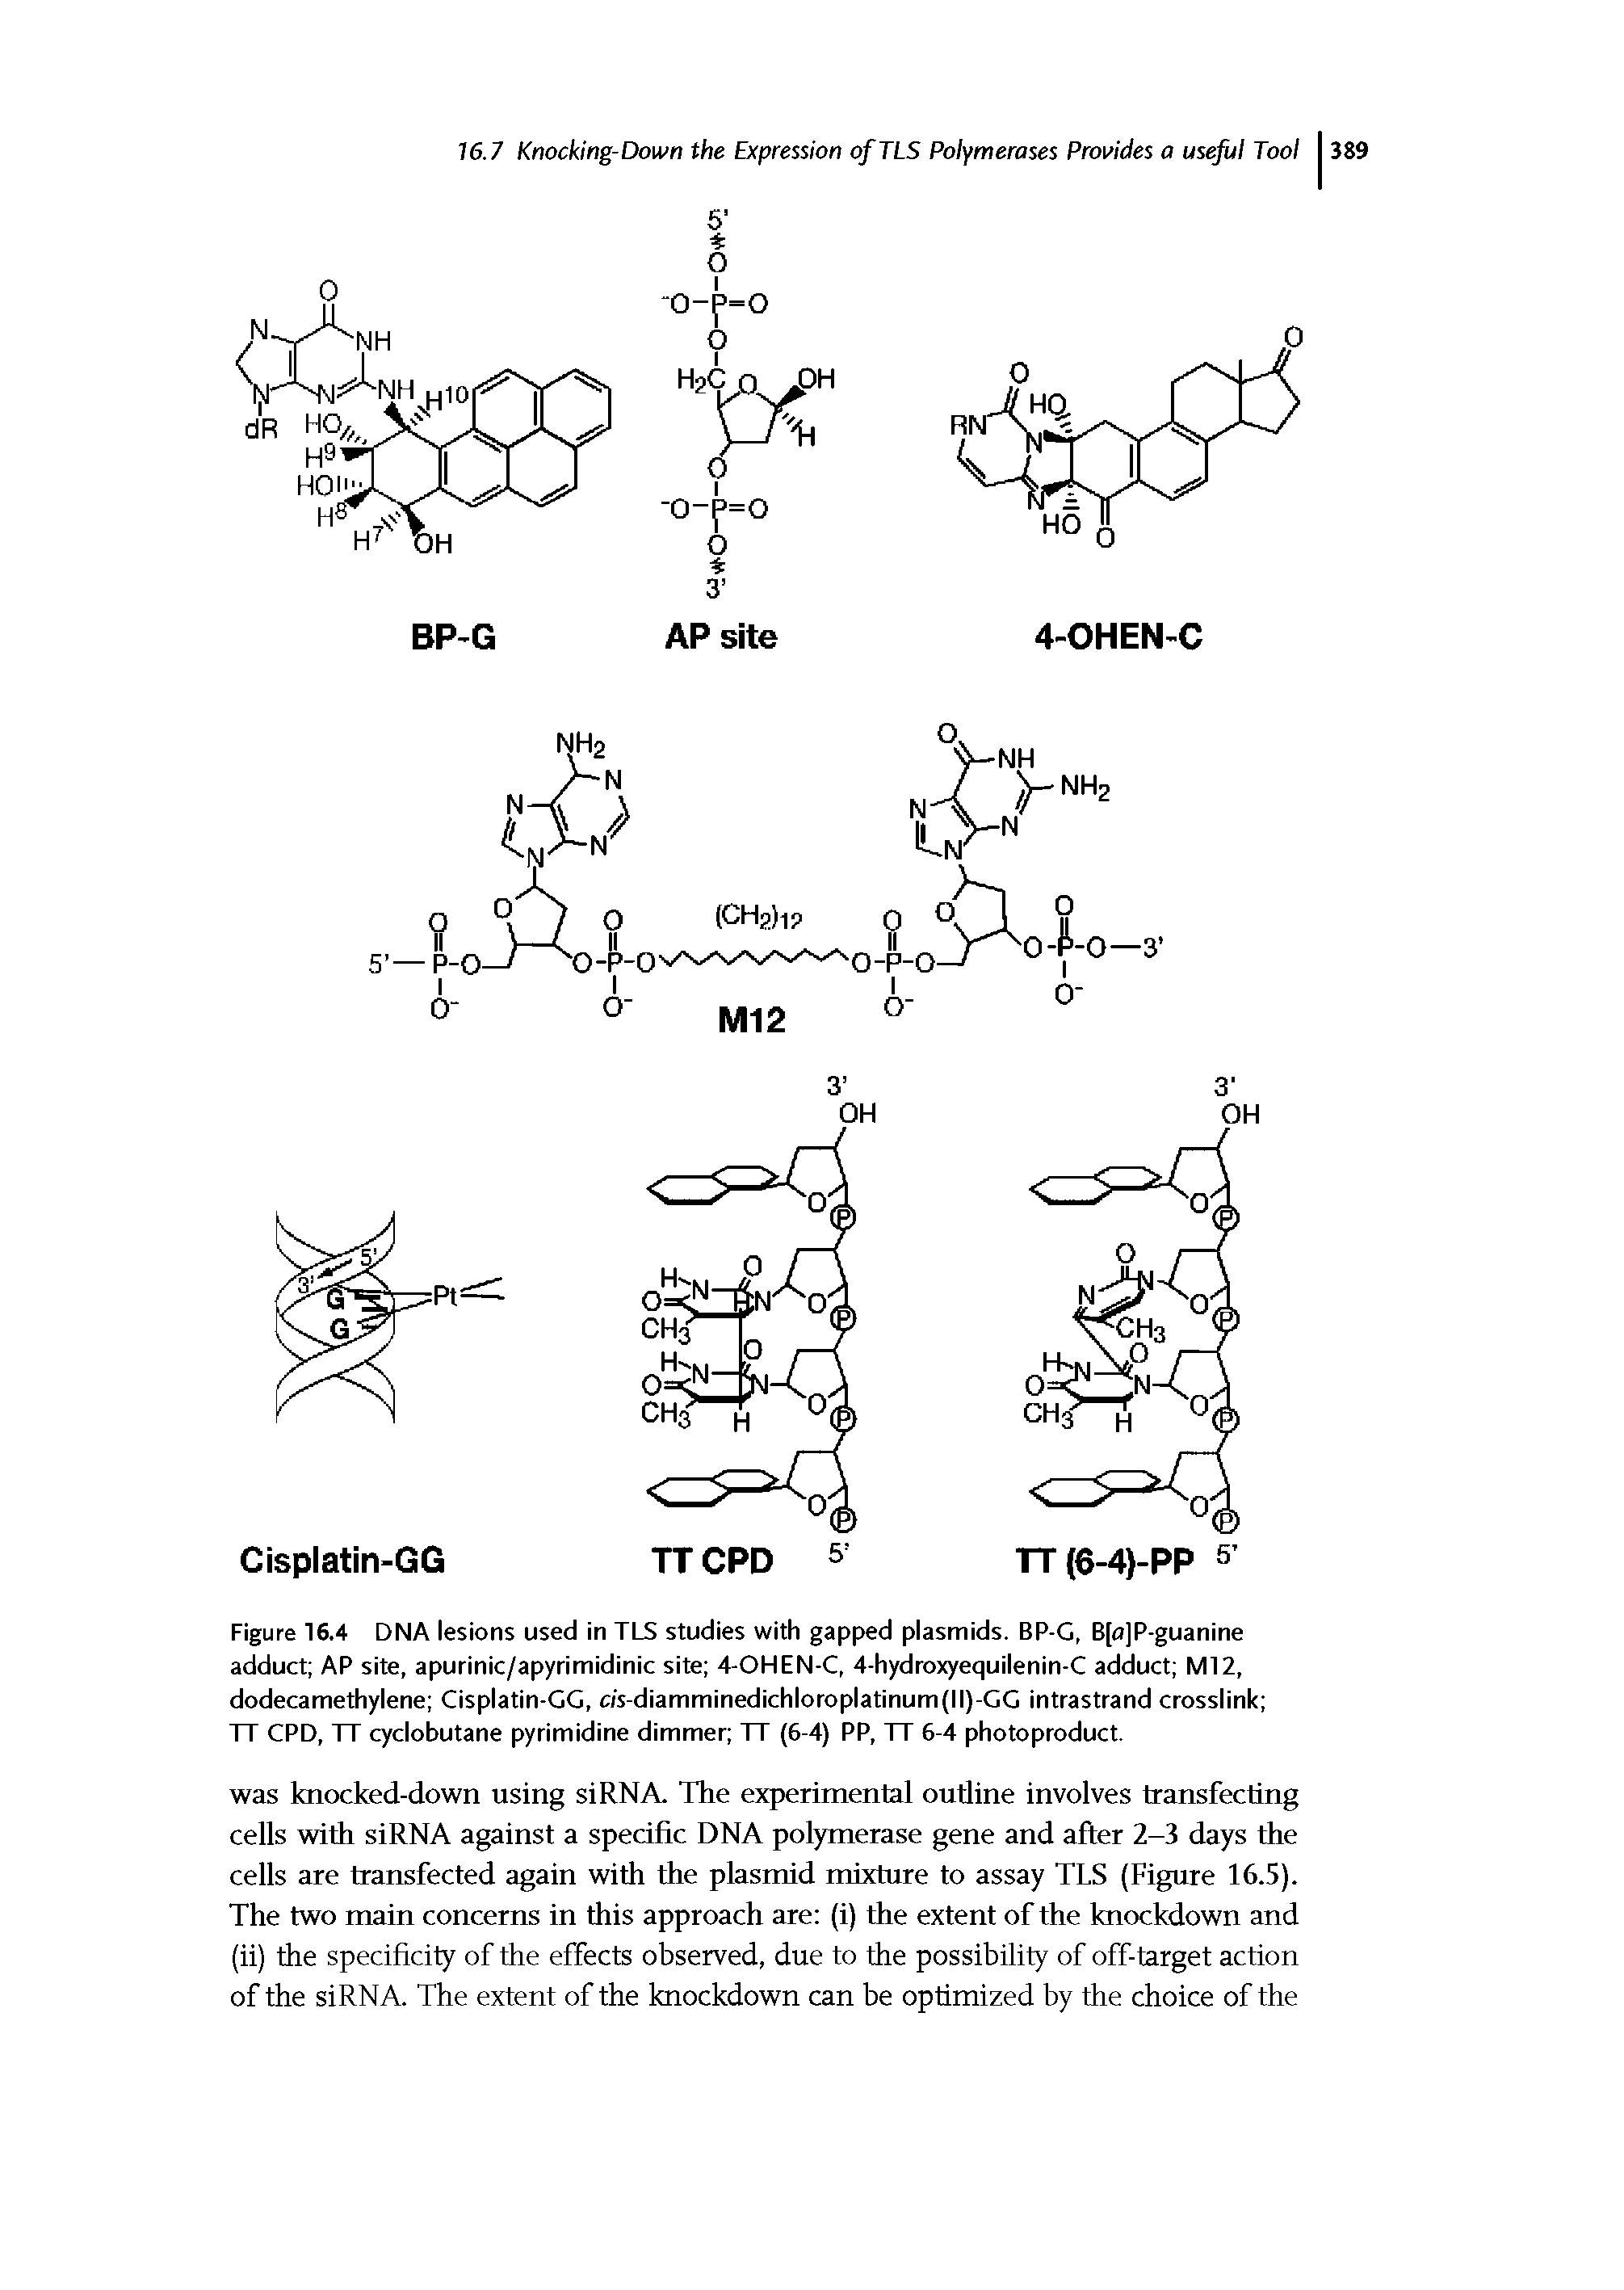 Figure 16.4 DNA lesions used in TLS studies with gapped plasmids. BP-G, B[o]P-guanine adduct AP site, apurinic/apyrimidinic site 4-OHEN-C, 4-hydroxyequilenin-C adduct M12, dodecamethylene Cisplatin-GG, c/s-diamminedichloroplatinum(ll)-GG intrastrand crosslink ...